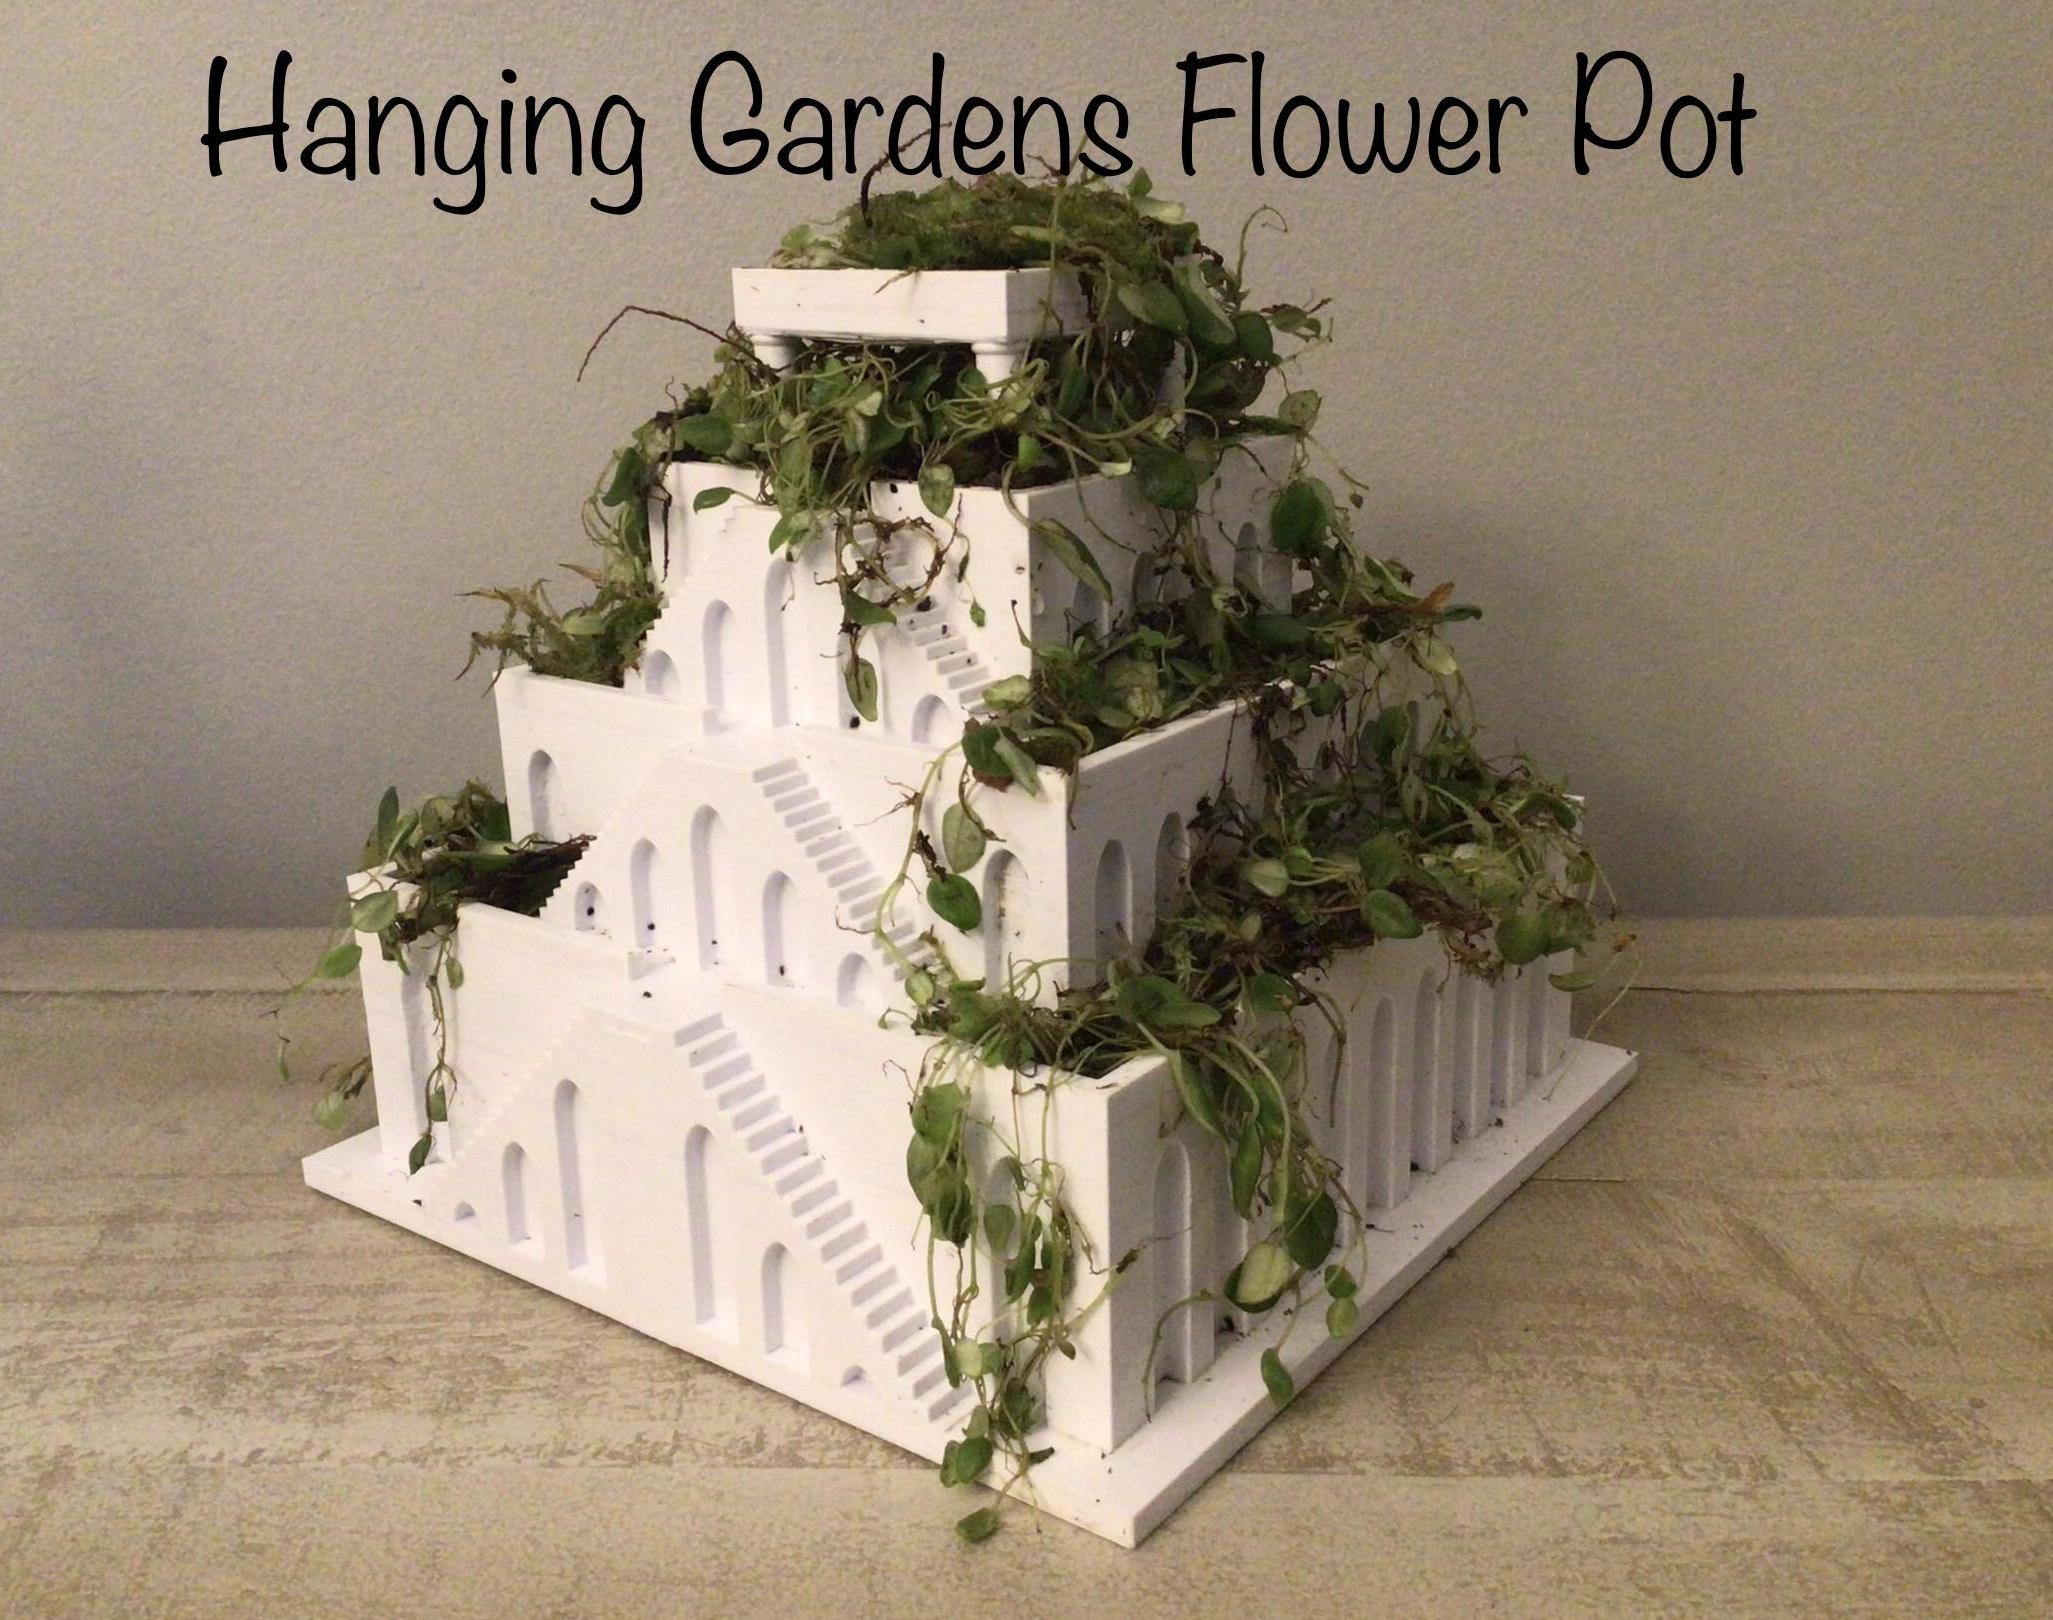 3D Printed Hanging Gardens Flower Pot